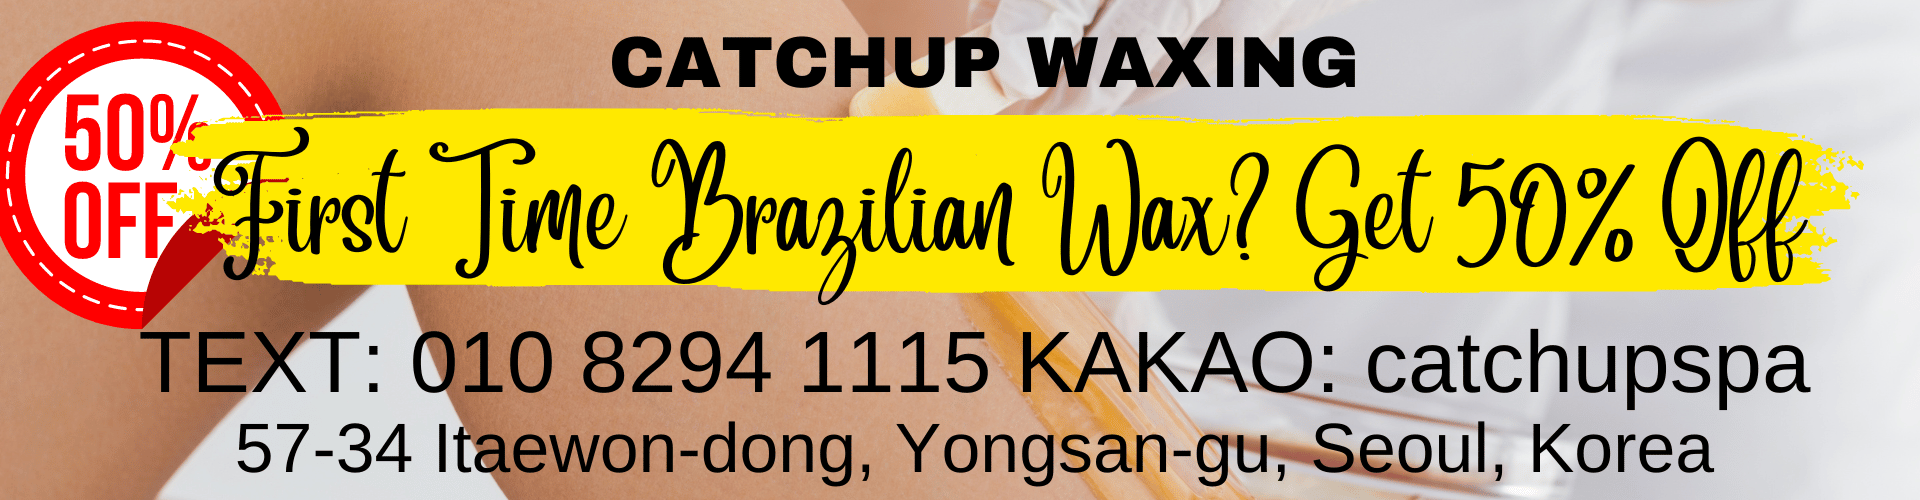 waxing salons in seoul